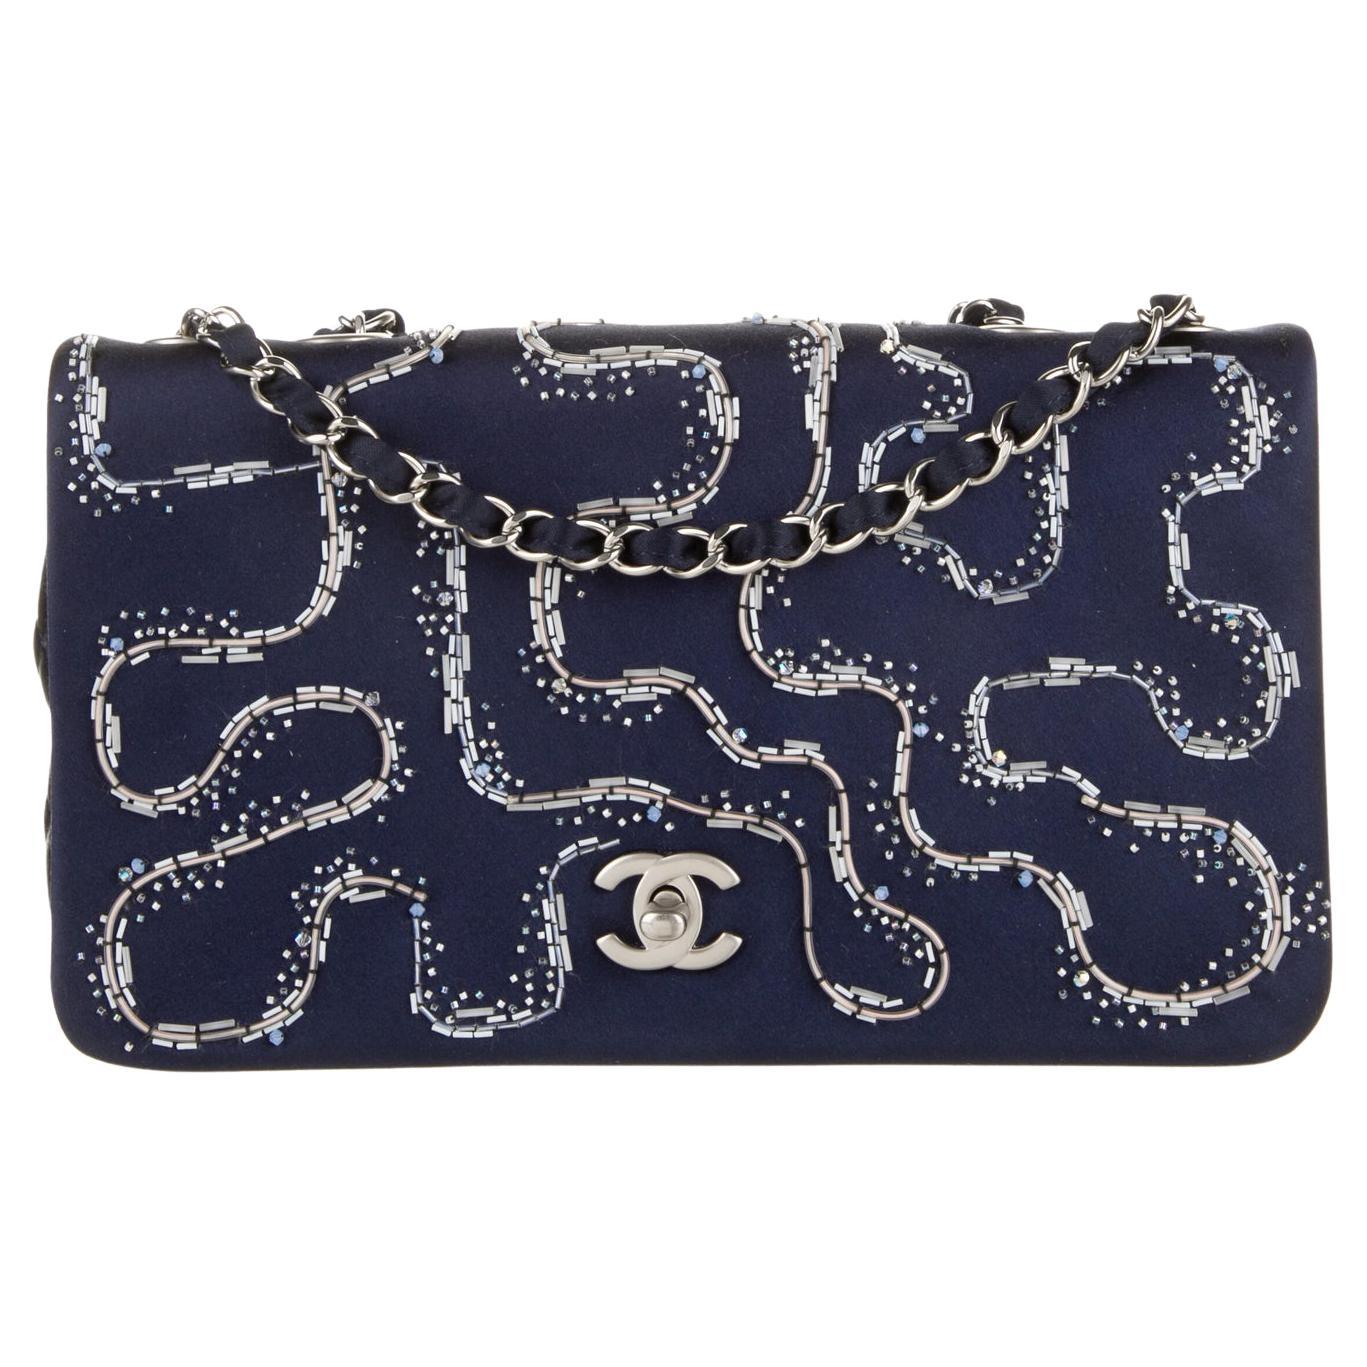 Chanel 2015 Rare Embellished Satin Blue Illuminating Medium Classic Flap Bag For Sale